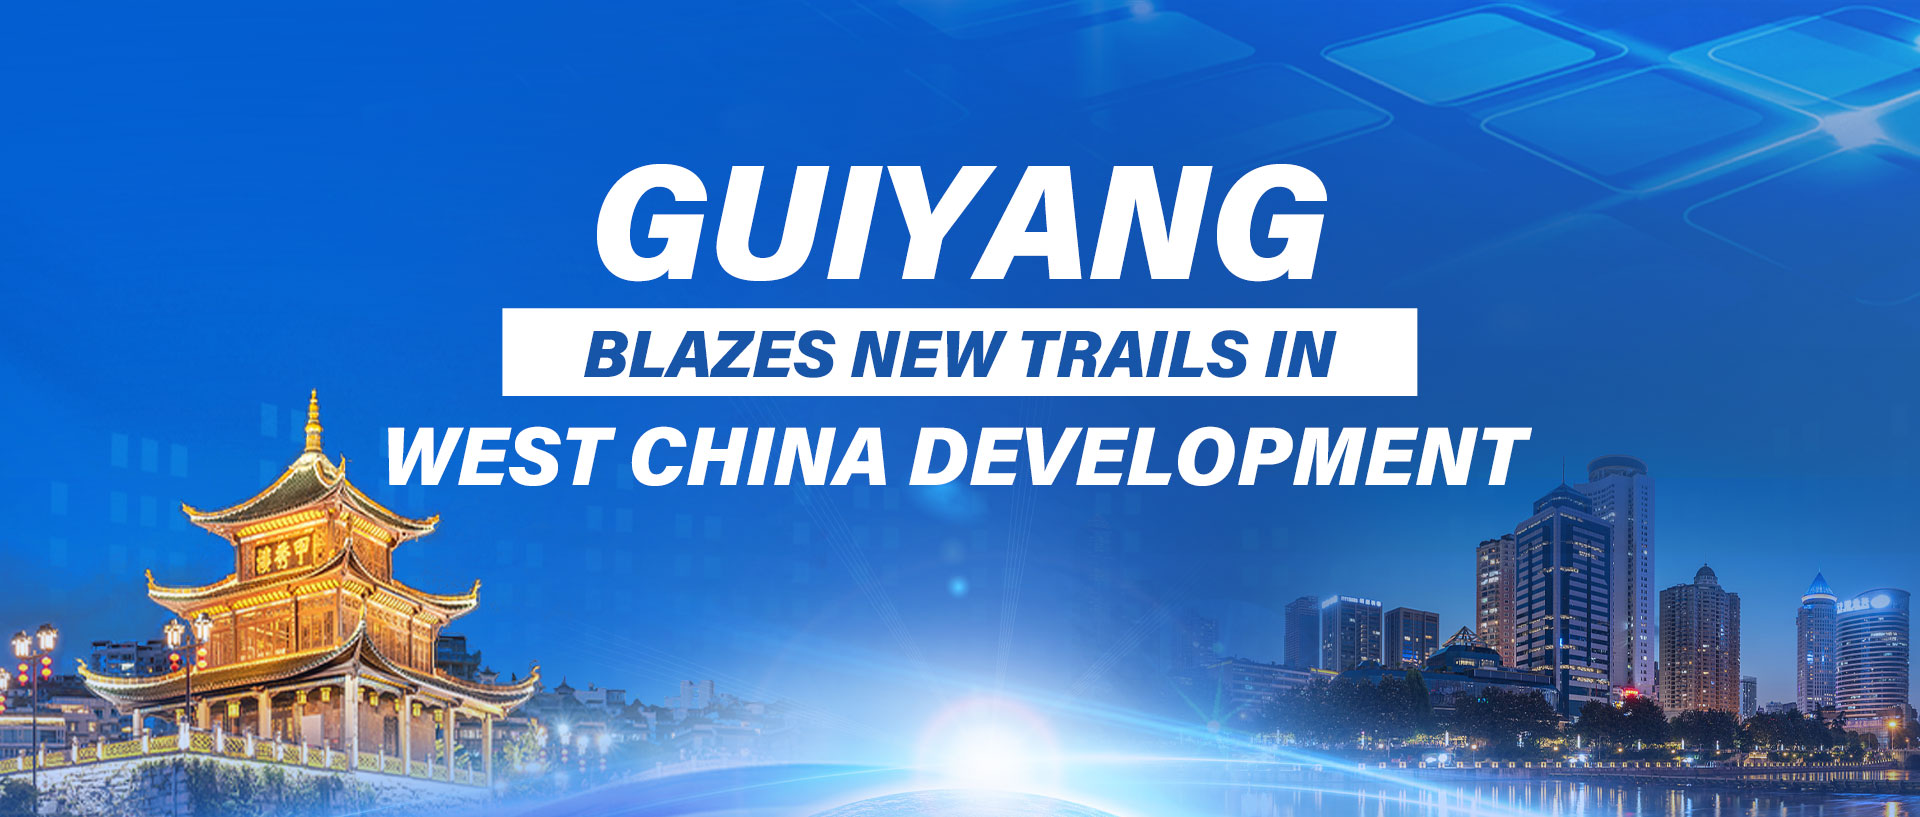 Guiyang blazes new trails in West China Development